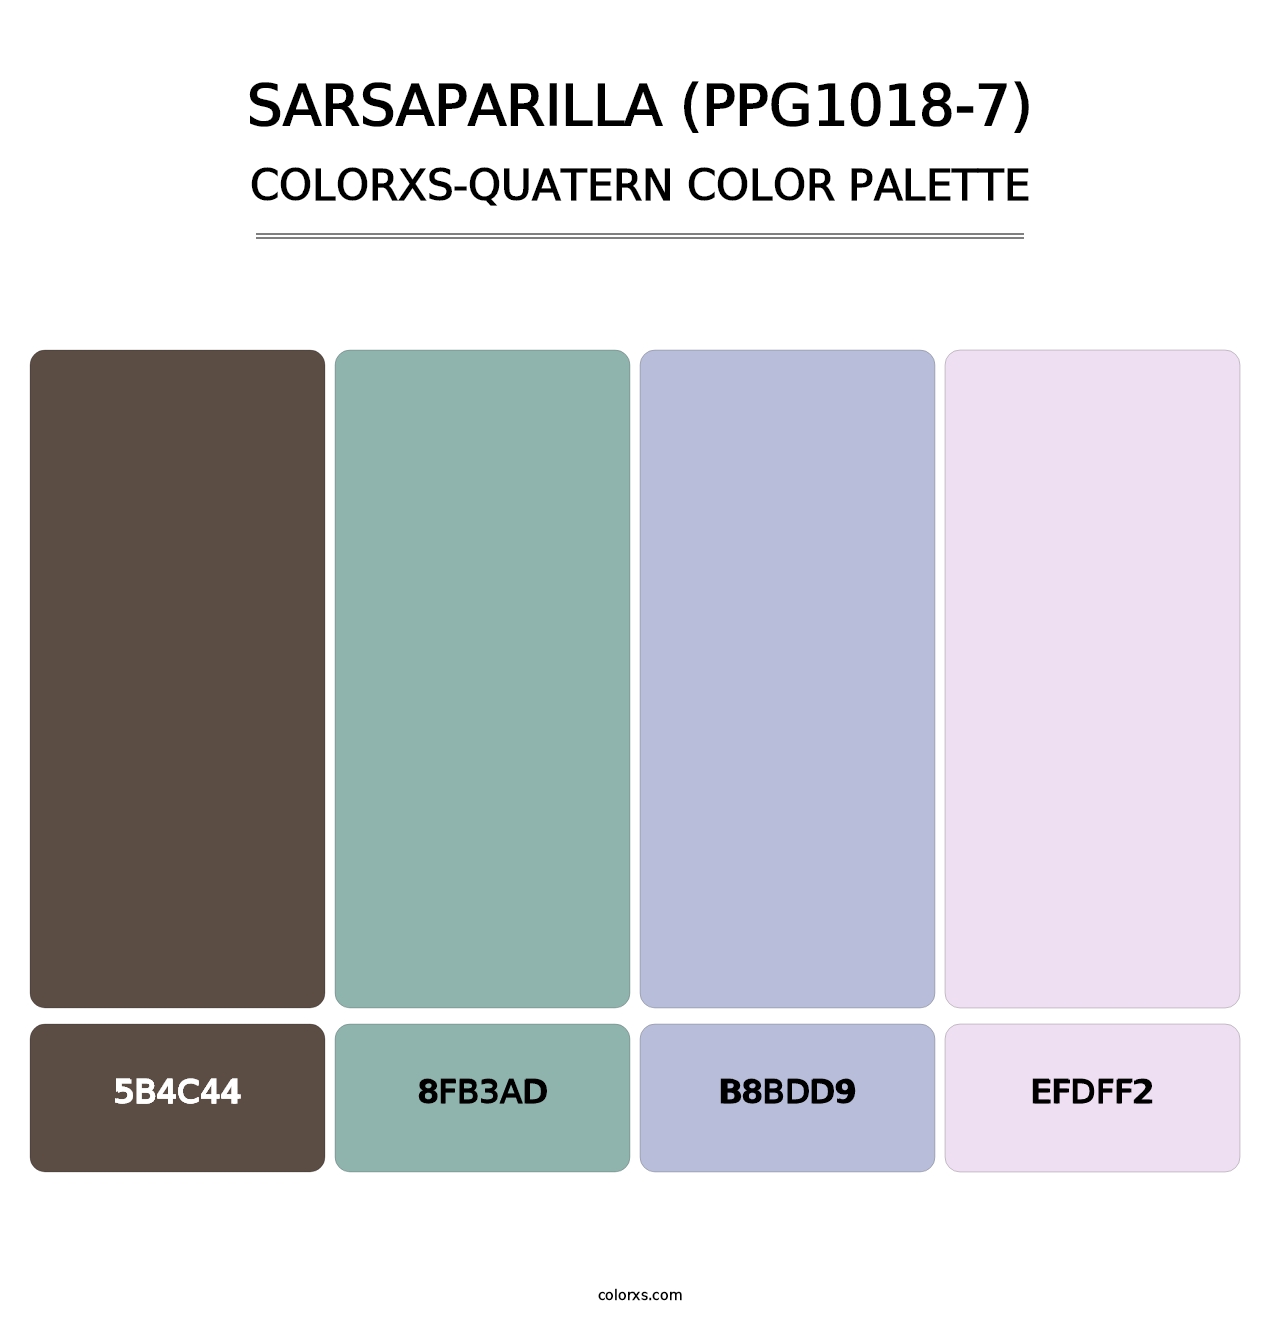 Sarsaparilla (PPG1018-7) - Colorxs Quatern Palette